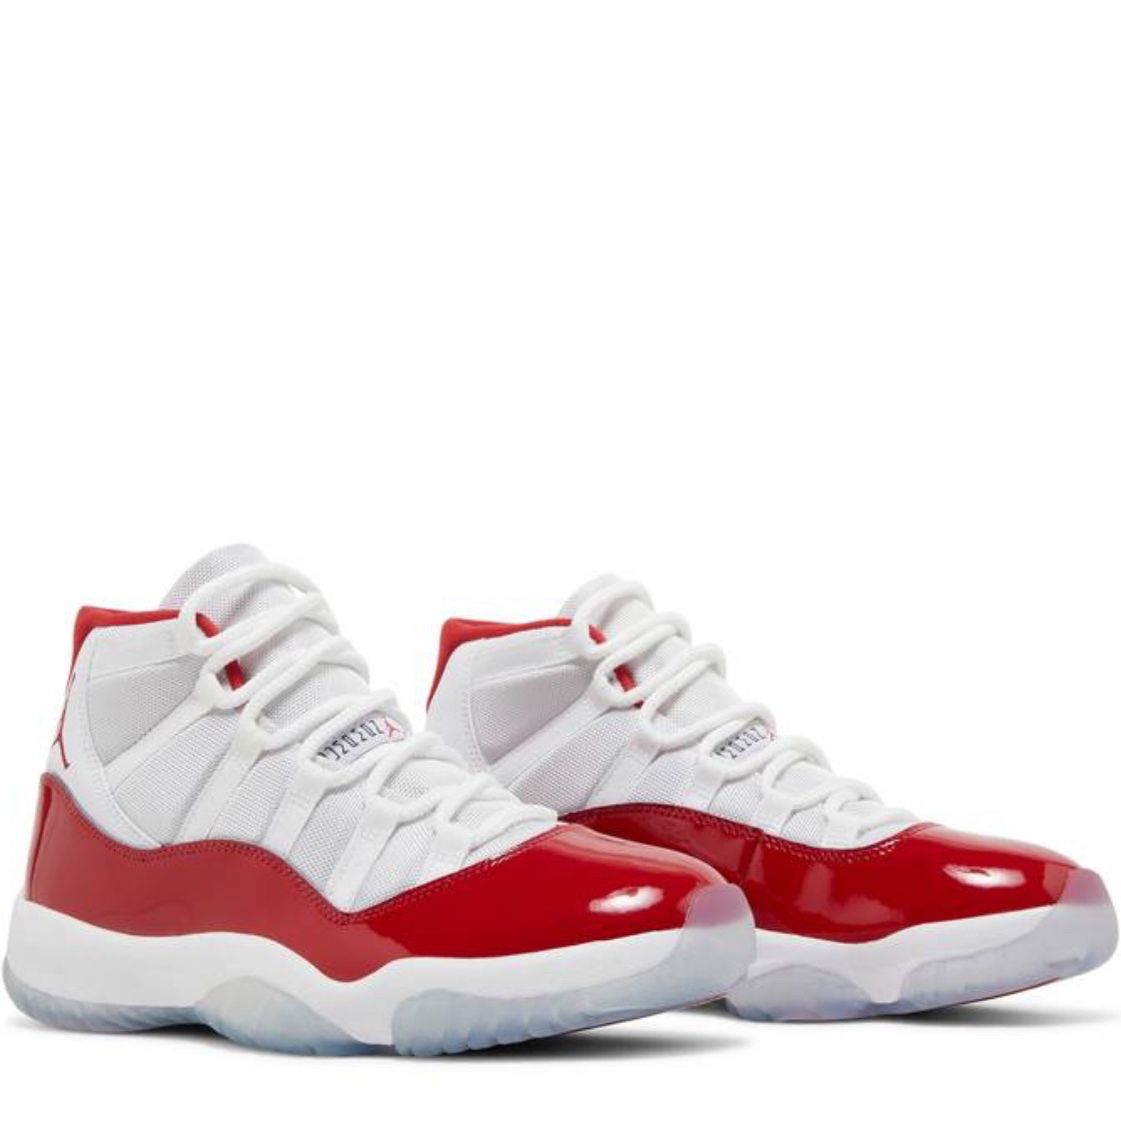 Jordan 11 (Cherry)- Size 7 